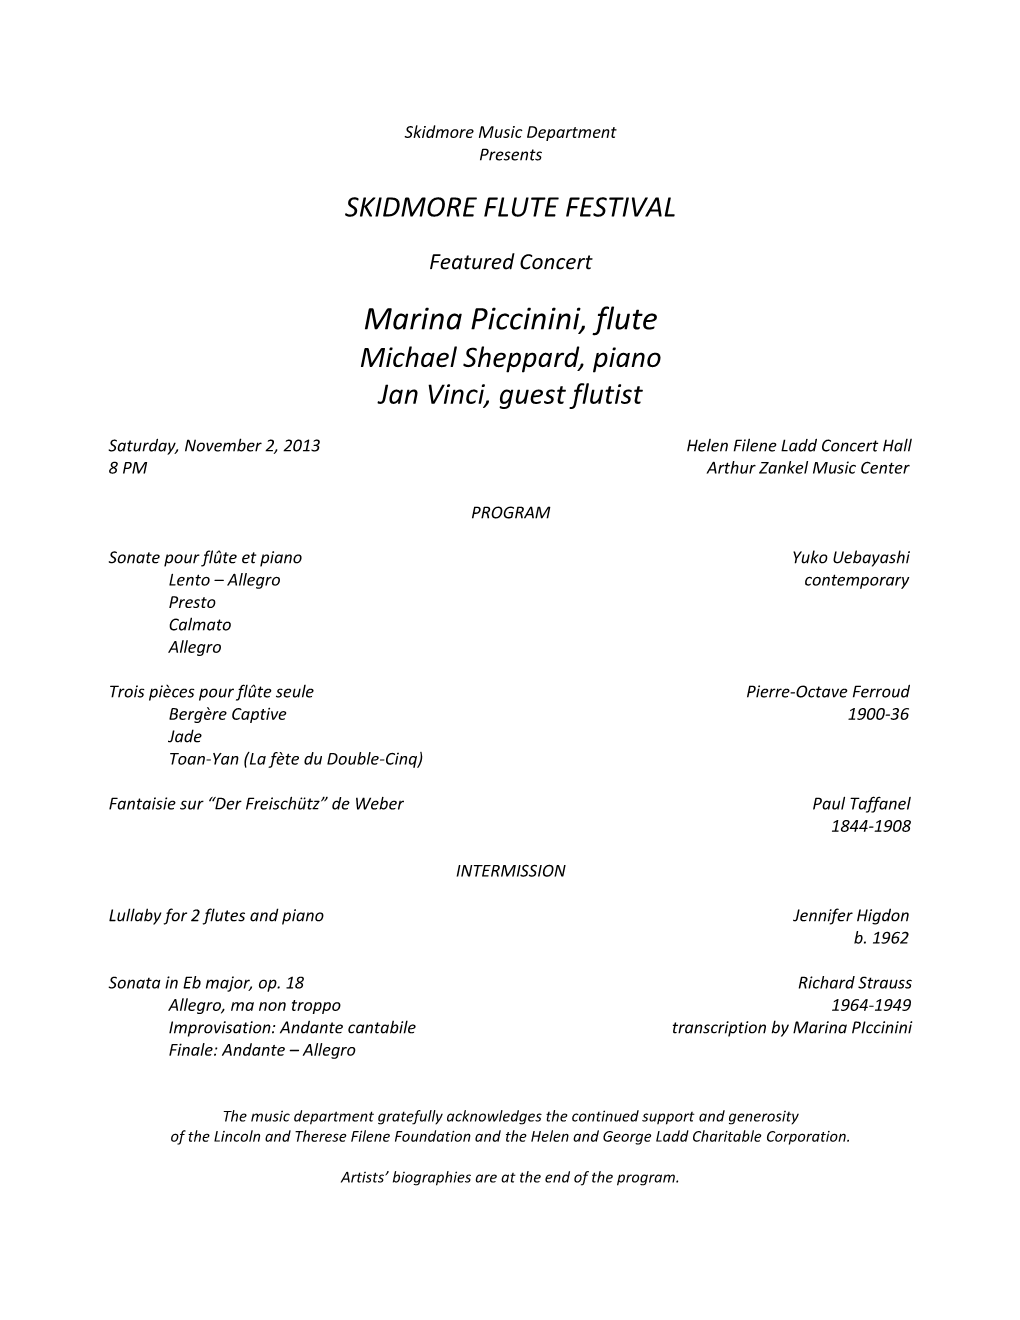 Marina Piccinini, Flute Michael Sheppard, Piano Jan Vinci, Guest Flutist